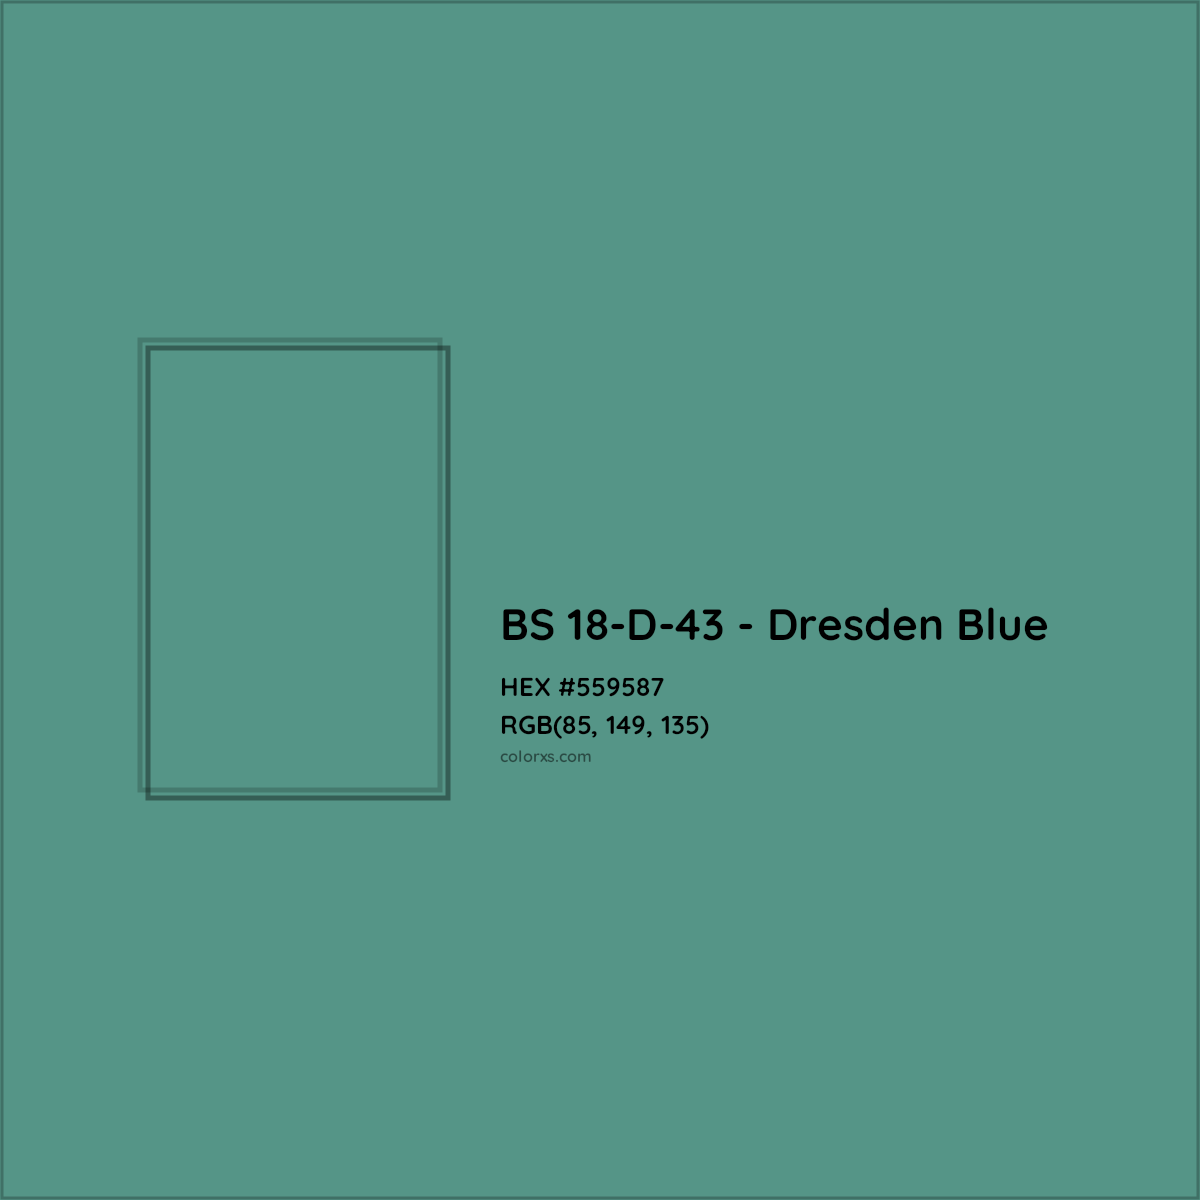 HEX #559587 BS 18-D-43 - Dresden Blue CMS British Standard 4800 - Color Code